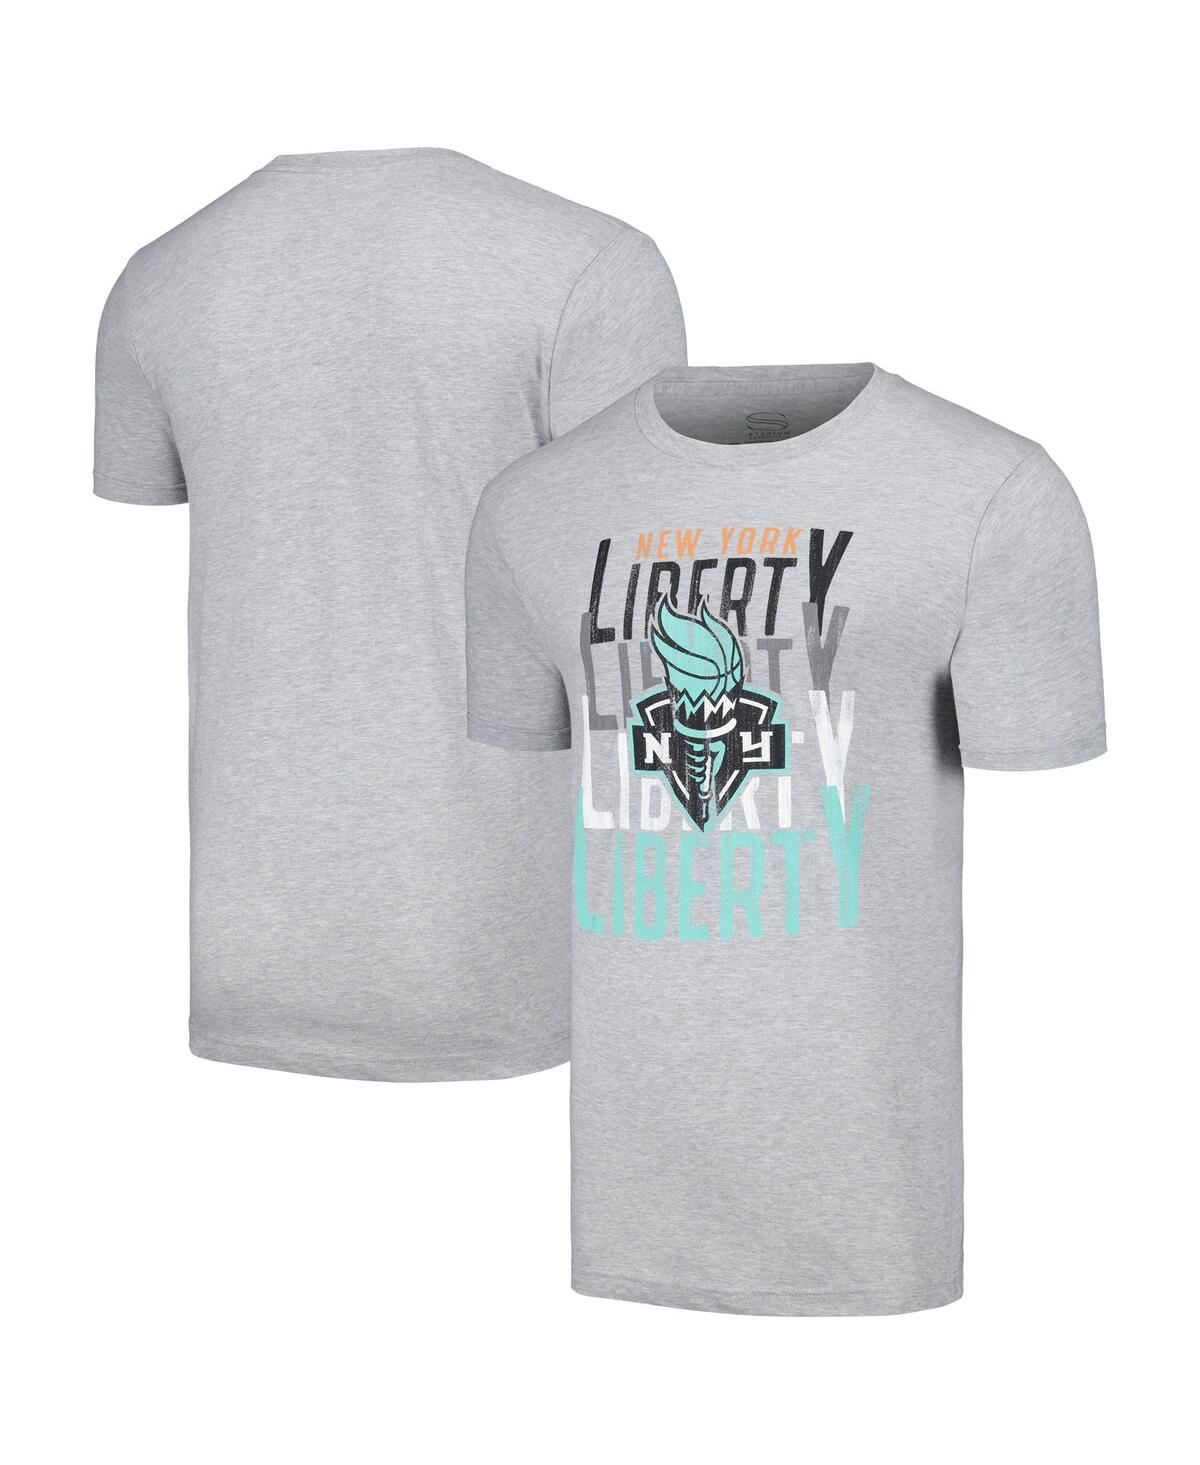 Men's and Women's Stadium Essentials Heather Gray New York Liberty Dedication T-shirt - Heather Gray